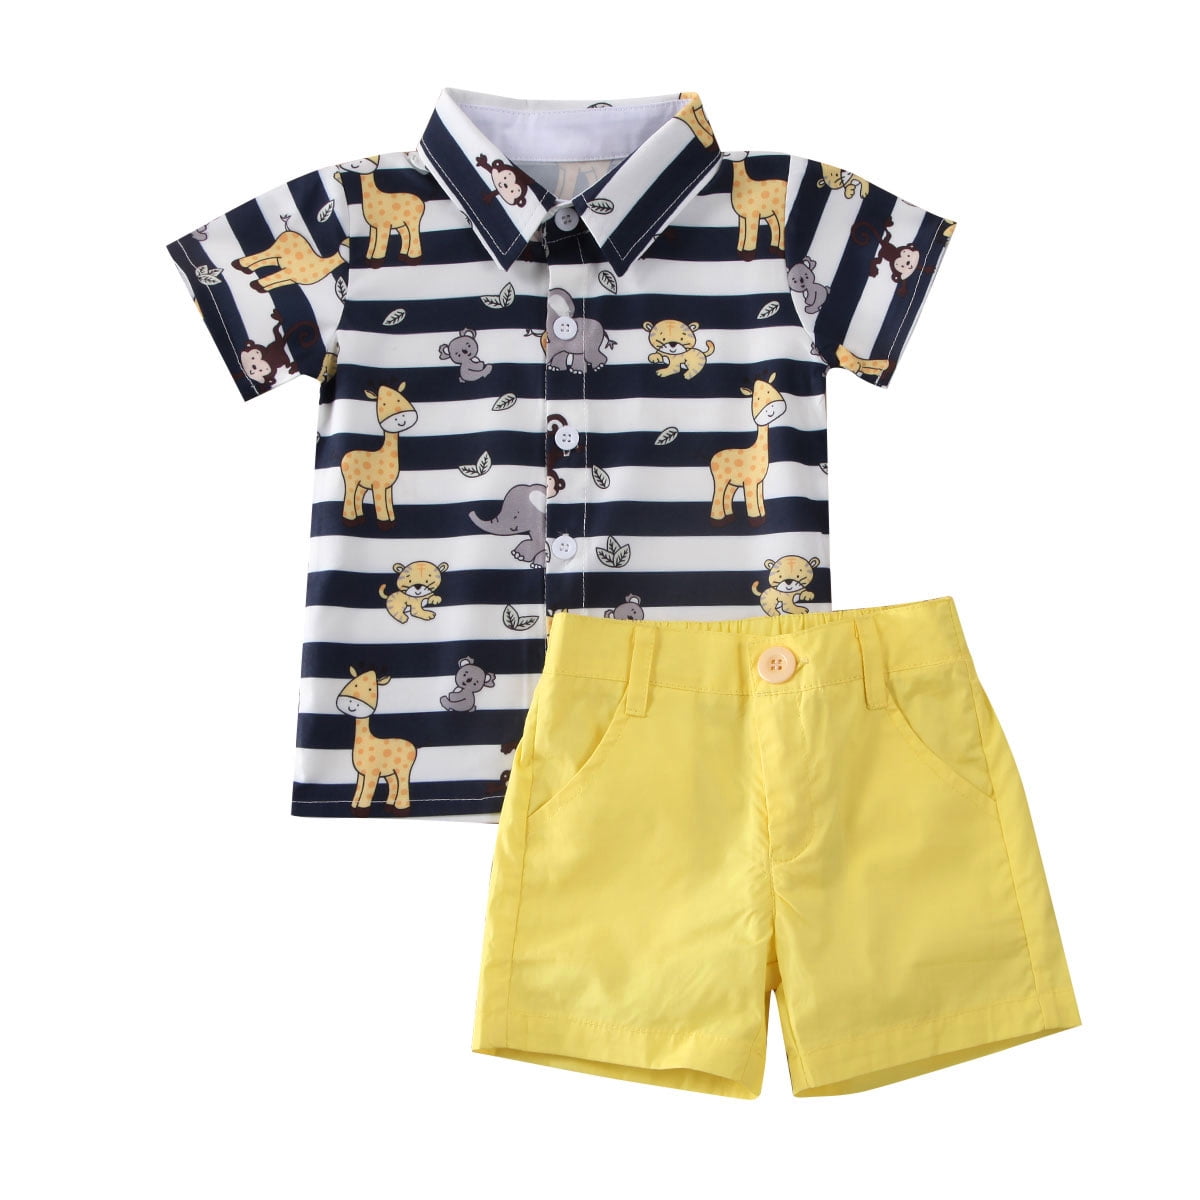 UK 2PCS Kids Baby Boy Gentleman Clothes Summer Striped Tops Shirt+Shorts Sets 